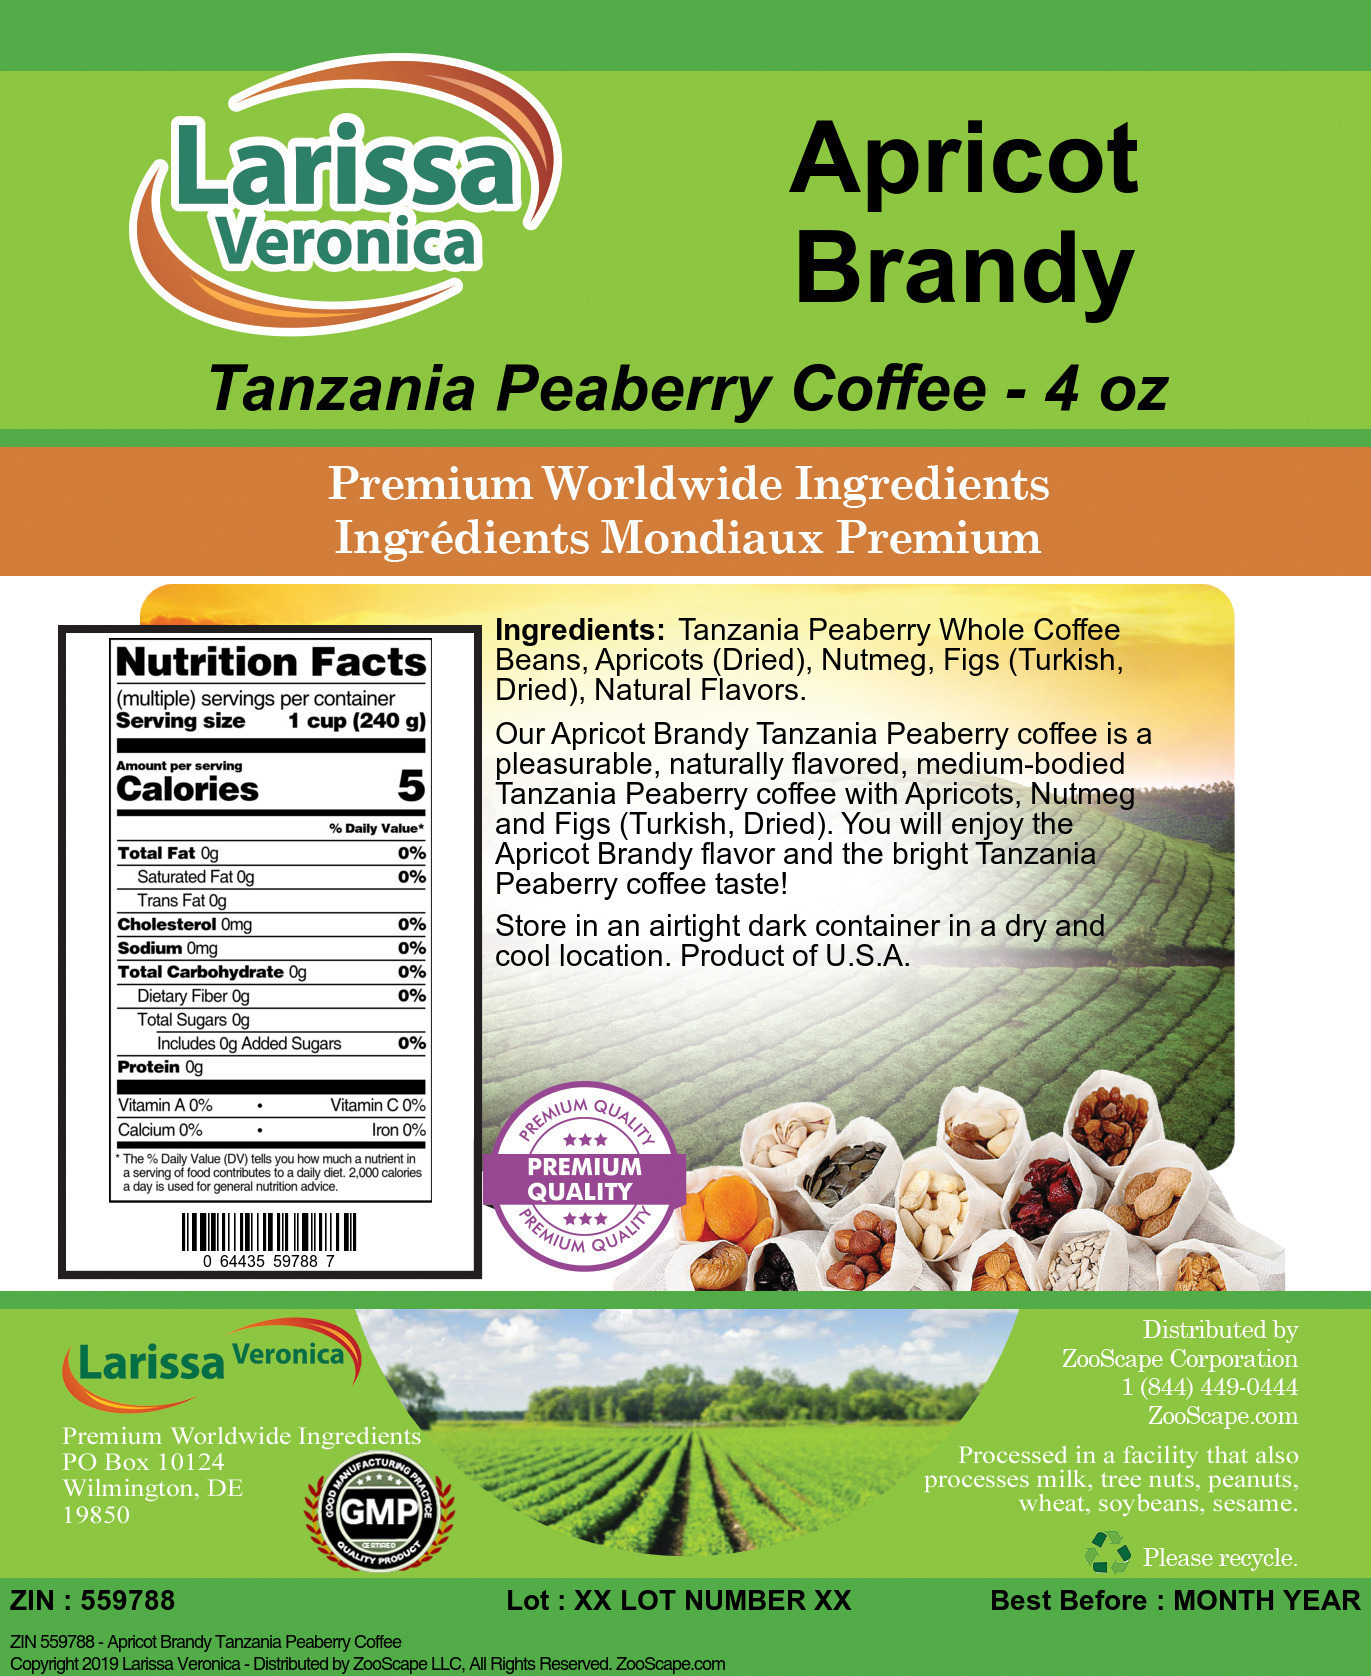 Apricot Brandy Tanzania Peaberry Coffee - Label